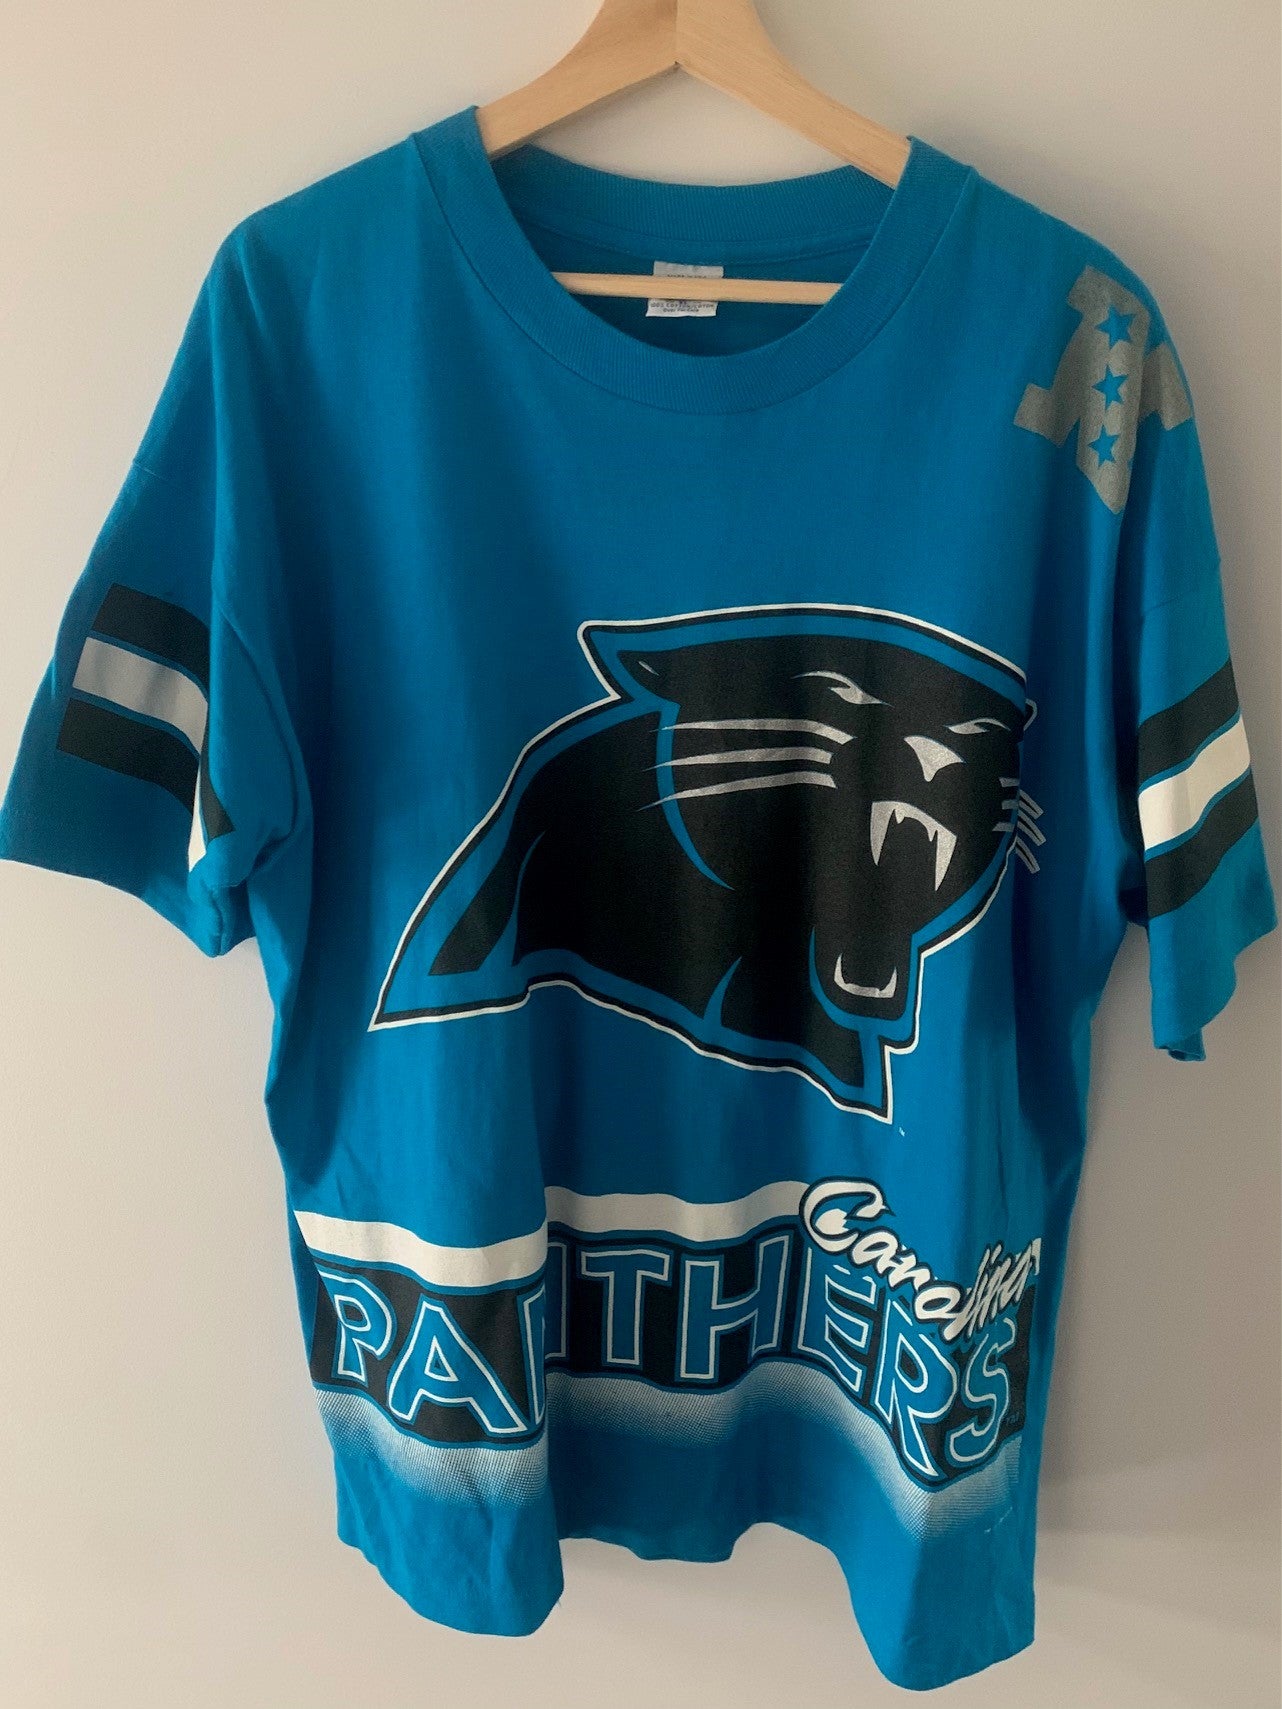 panthers vintage jersey